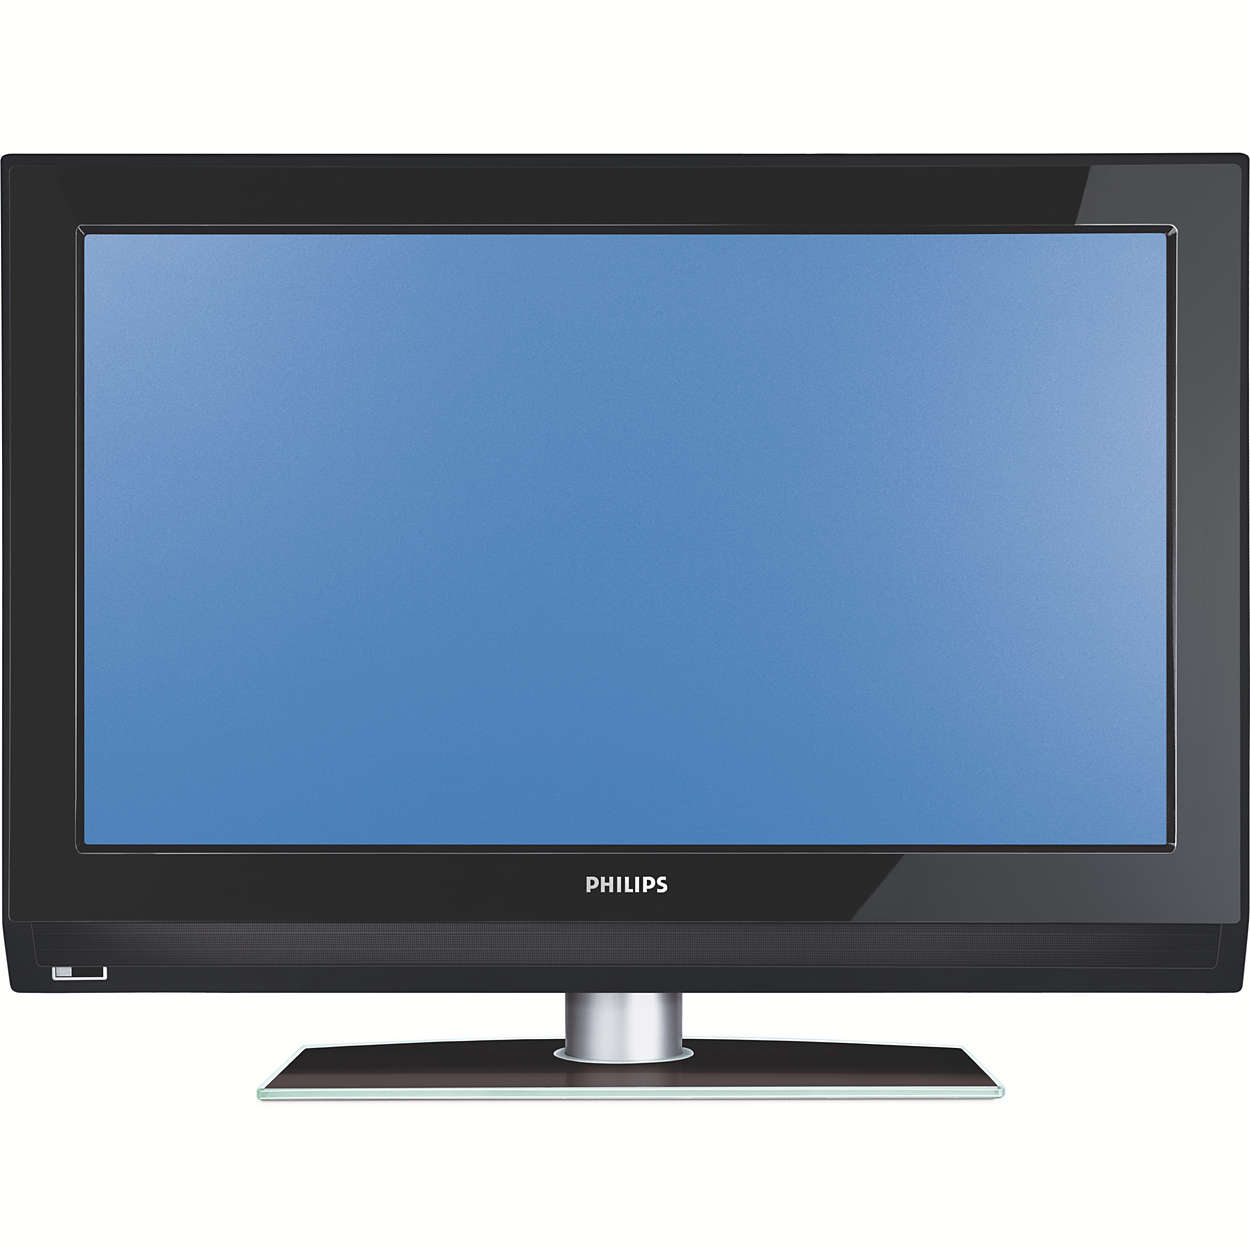 digital widescreen flat TV 32PFL5332D/37 | Philips